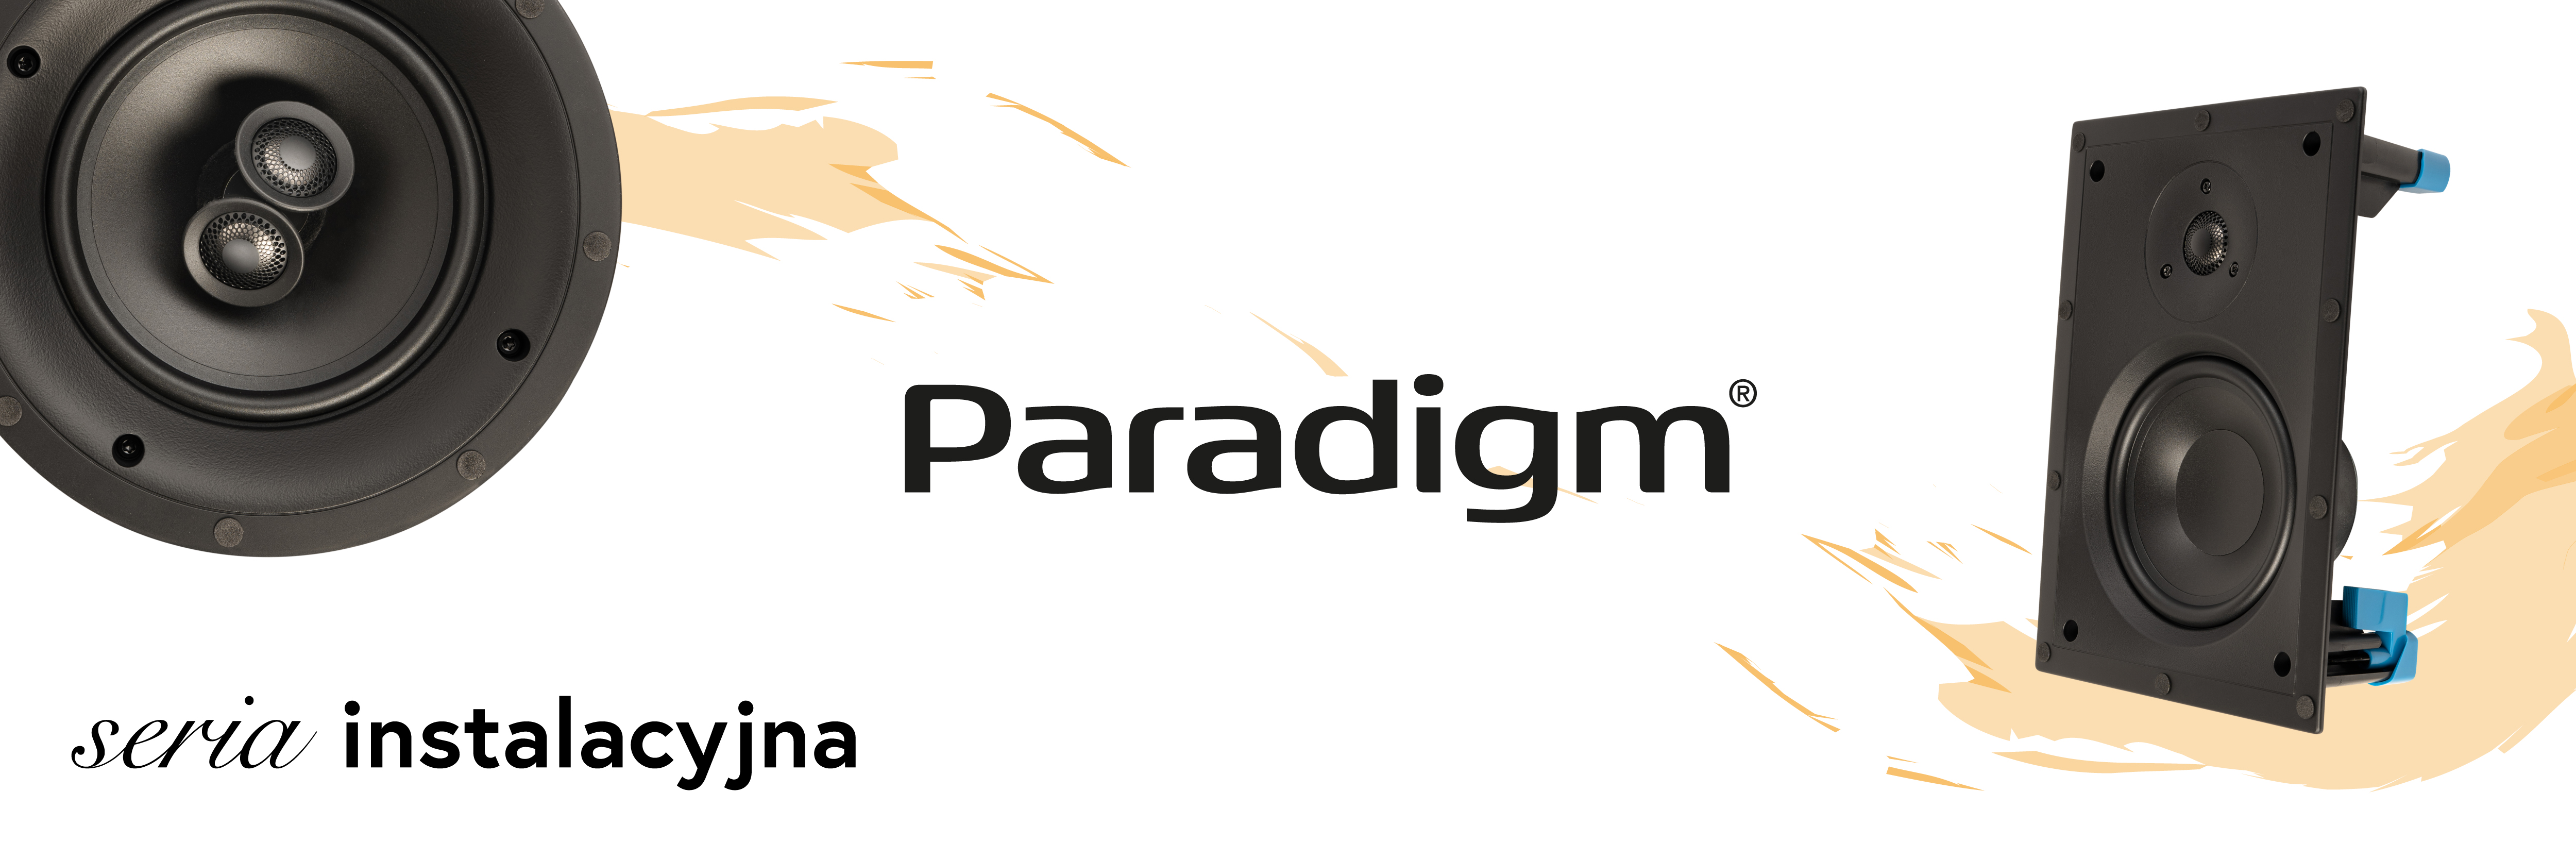 POLPAK-Paradigm-RTV-www-3NS05